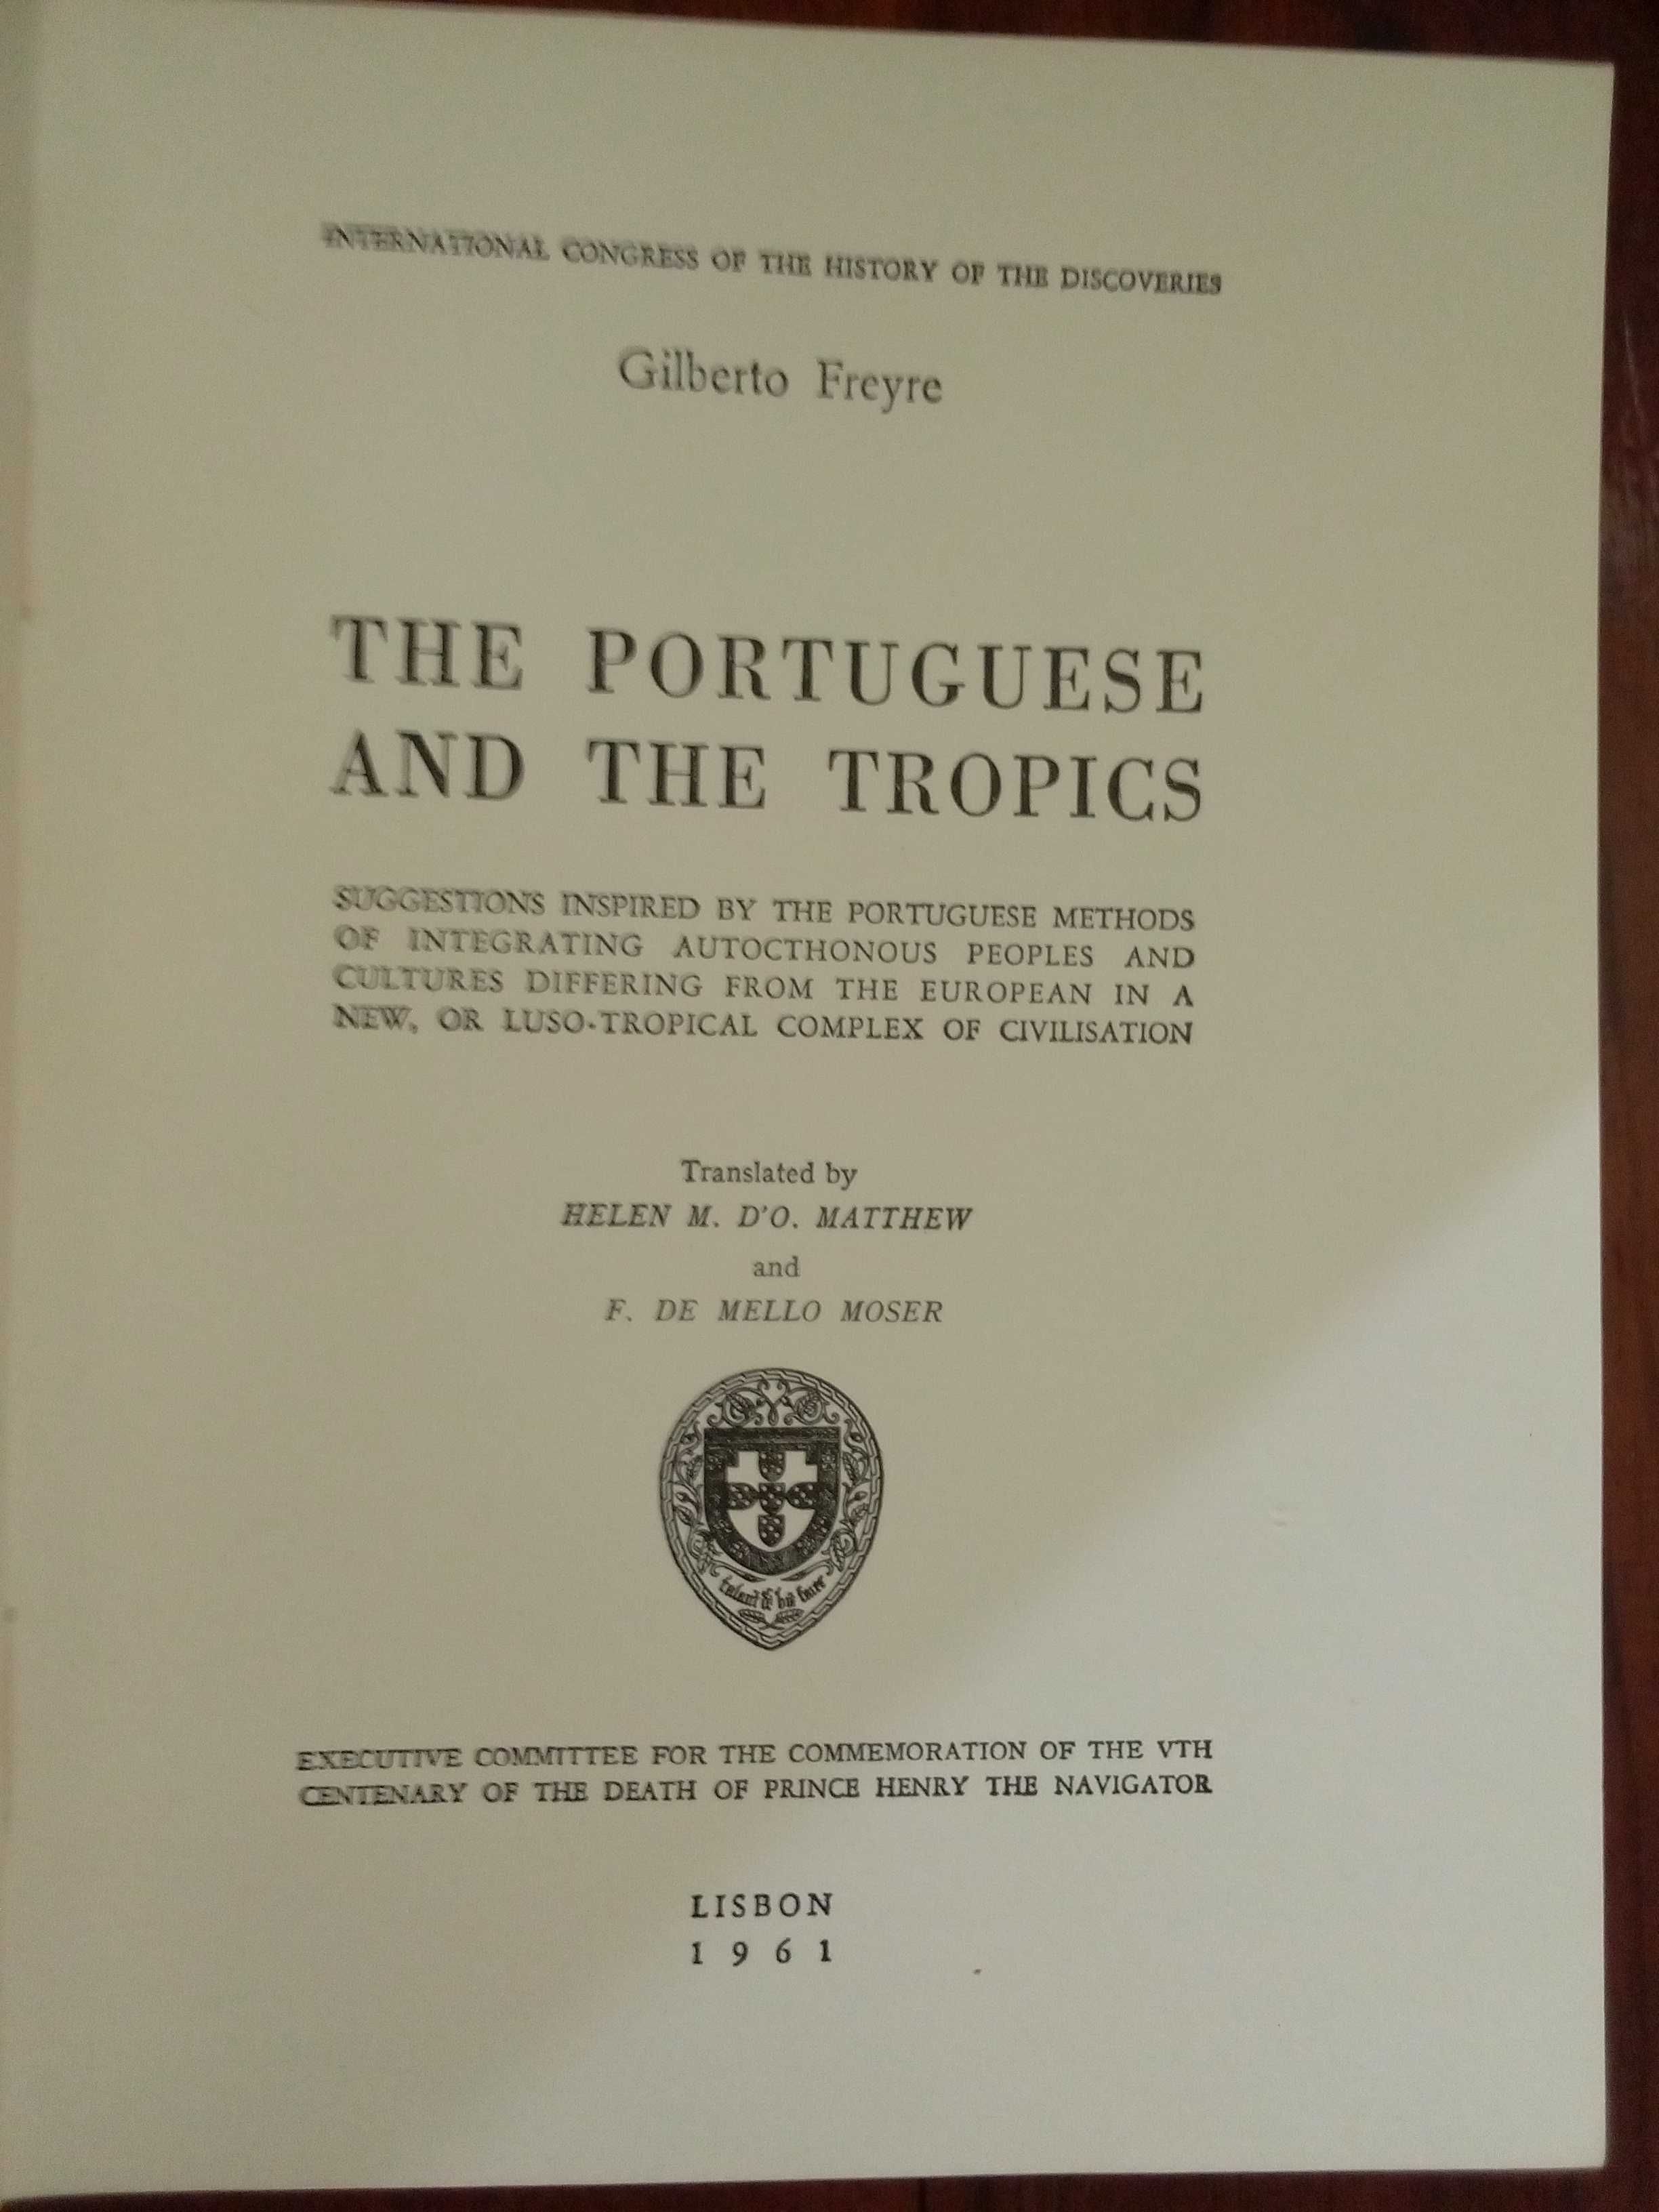 Gilberto Freyre - The portuguese and the tropics